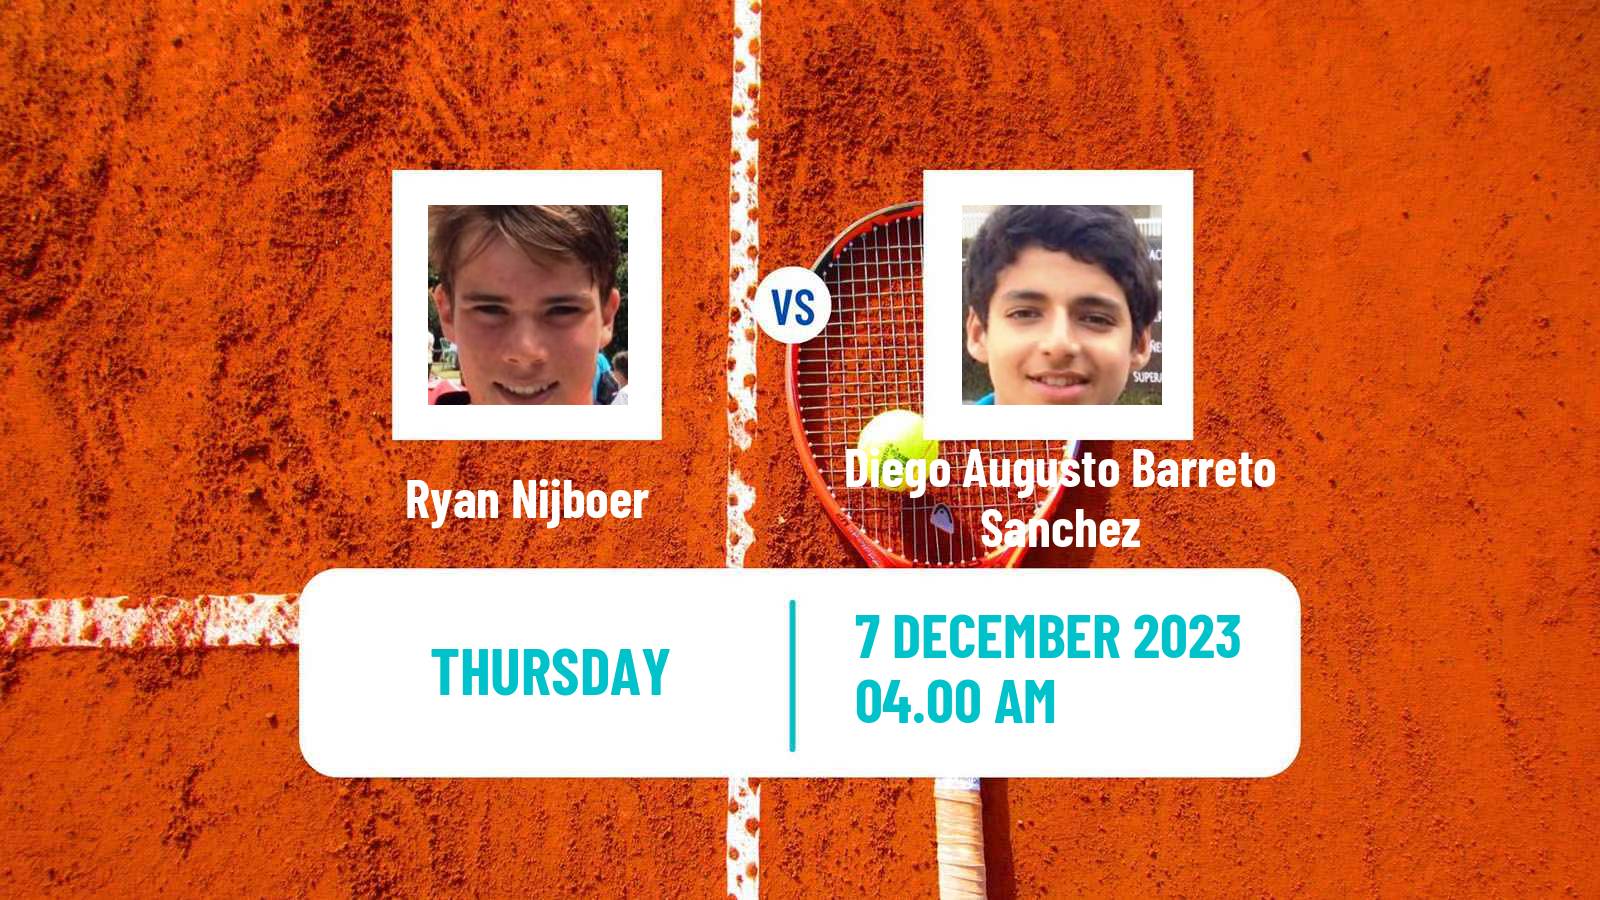 Tennis ITF M15 Madrid 3 Men Ryan Nijboer - Diego Augusto Barreto Sanchez